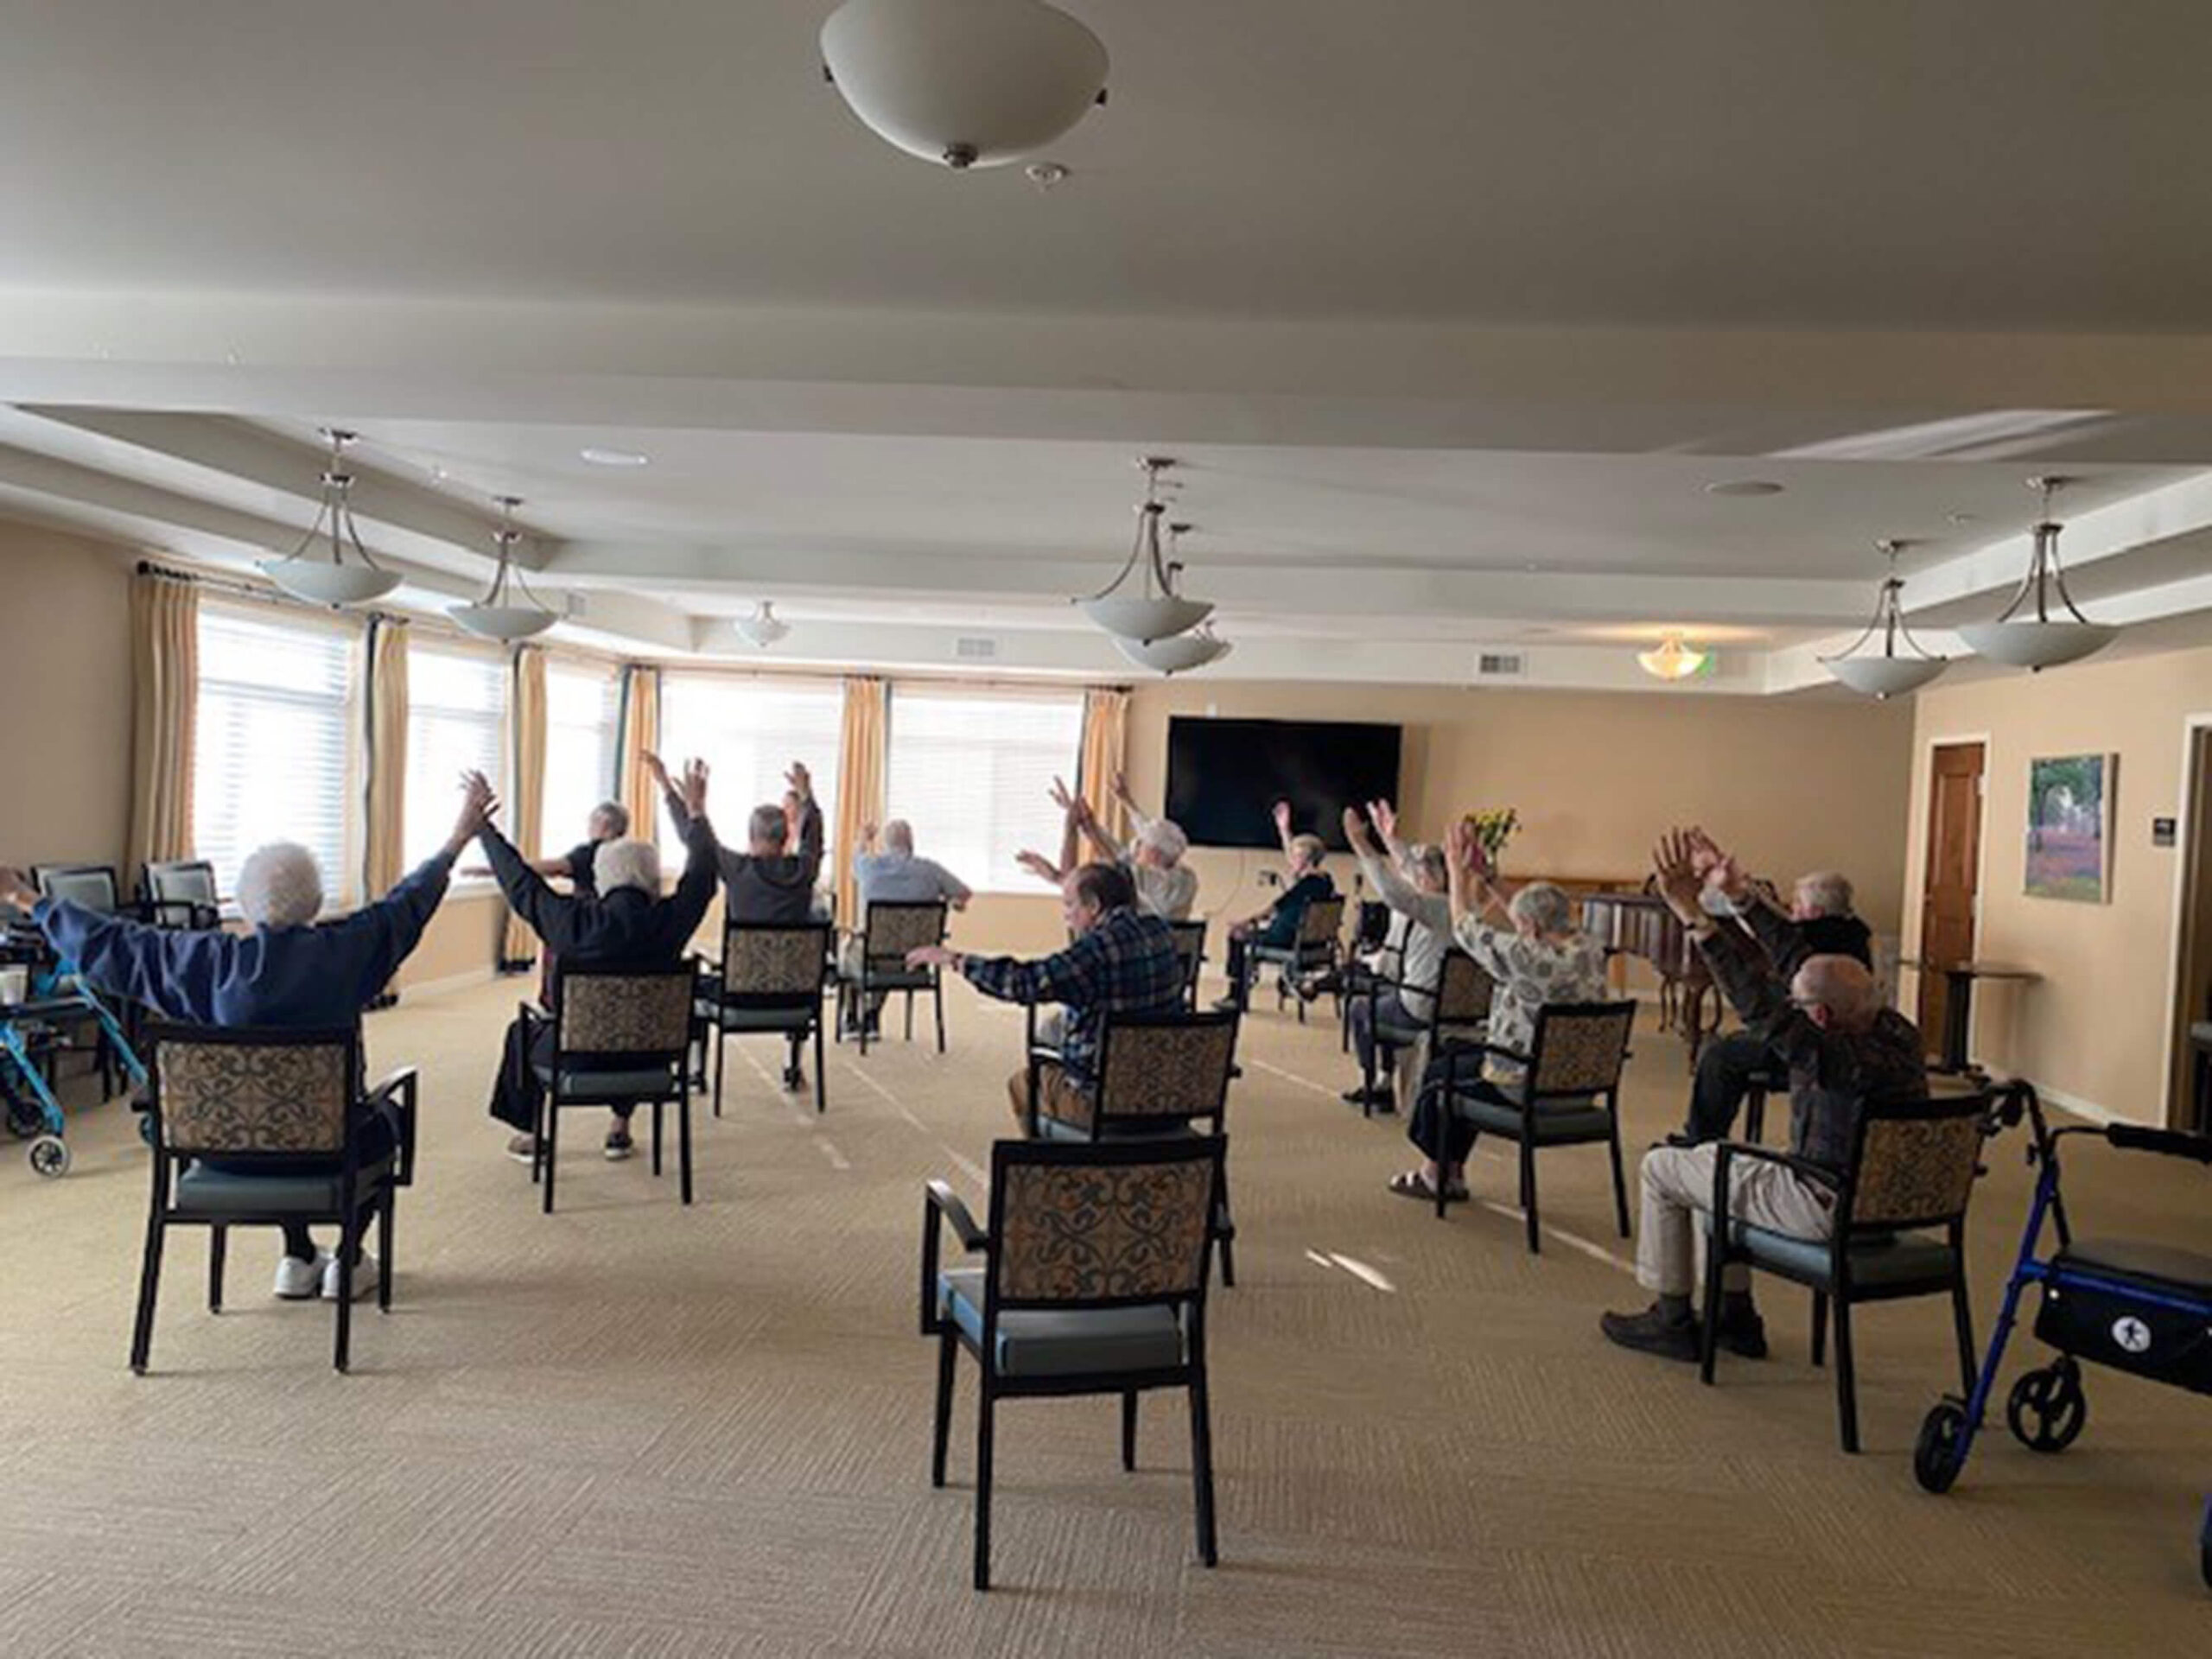 Elderly residents raising hands joyfully in a group exercise session in Edina community.